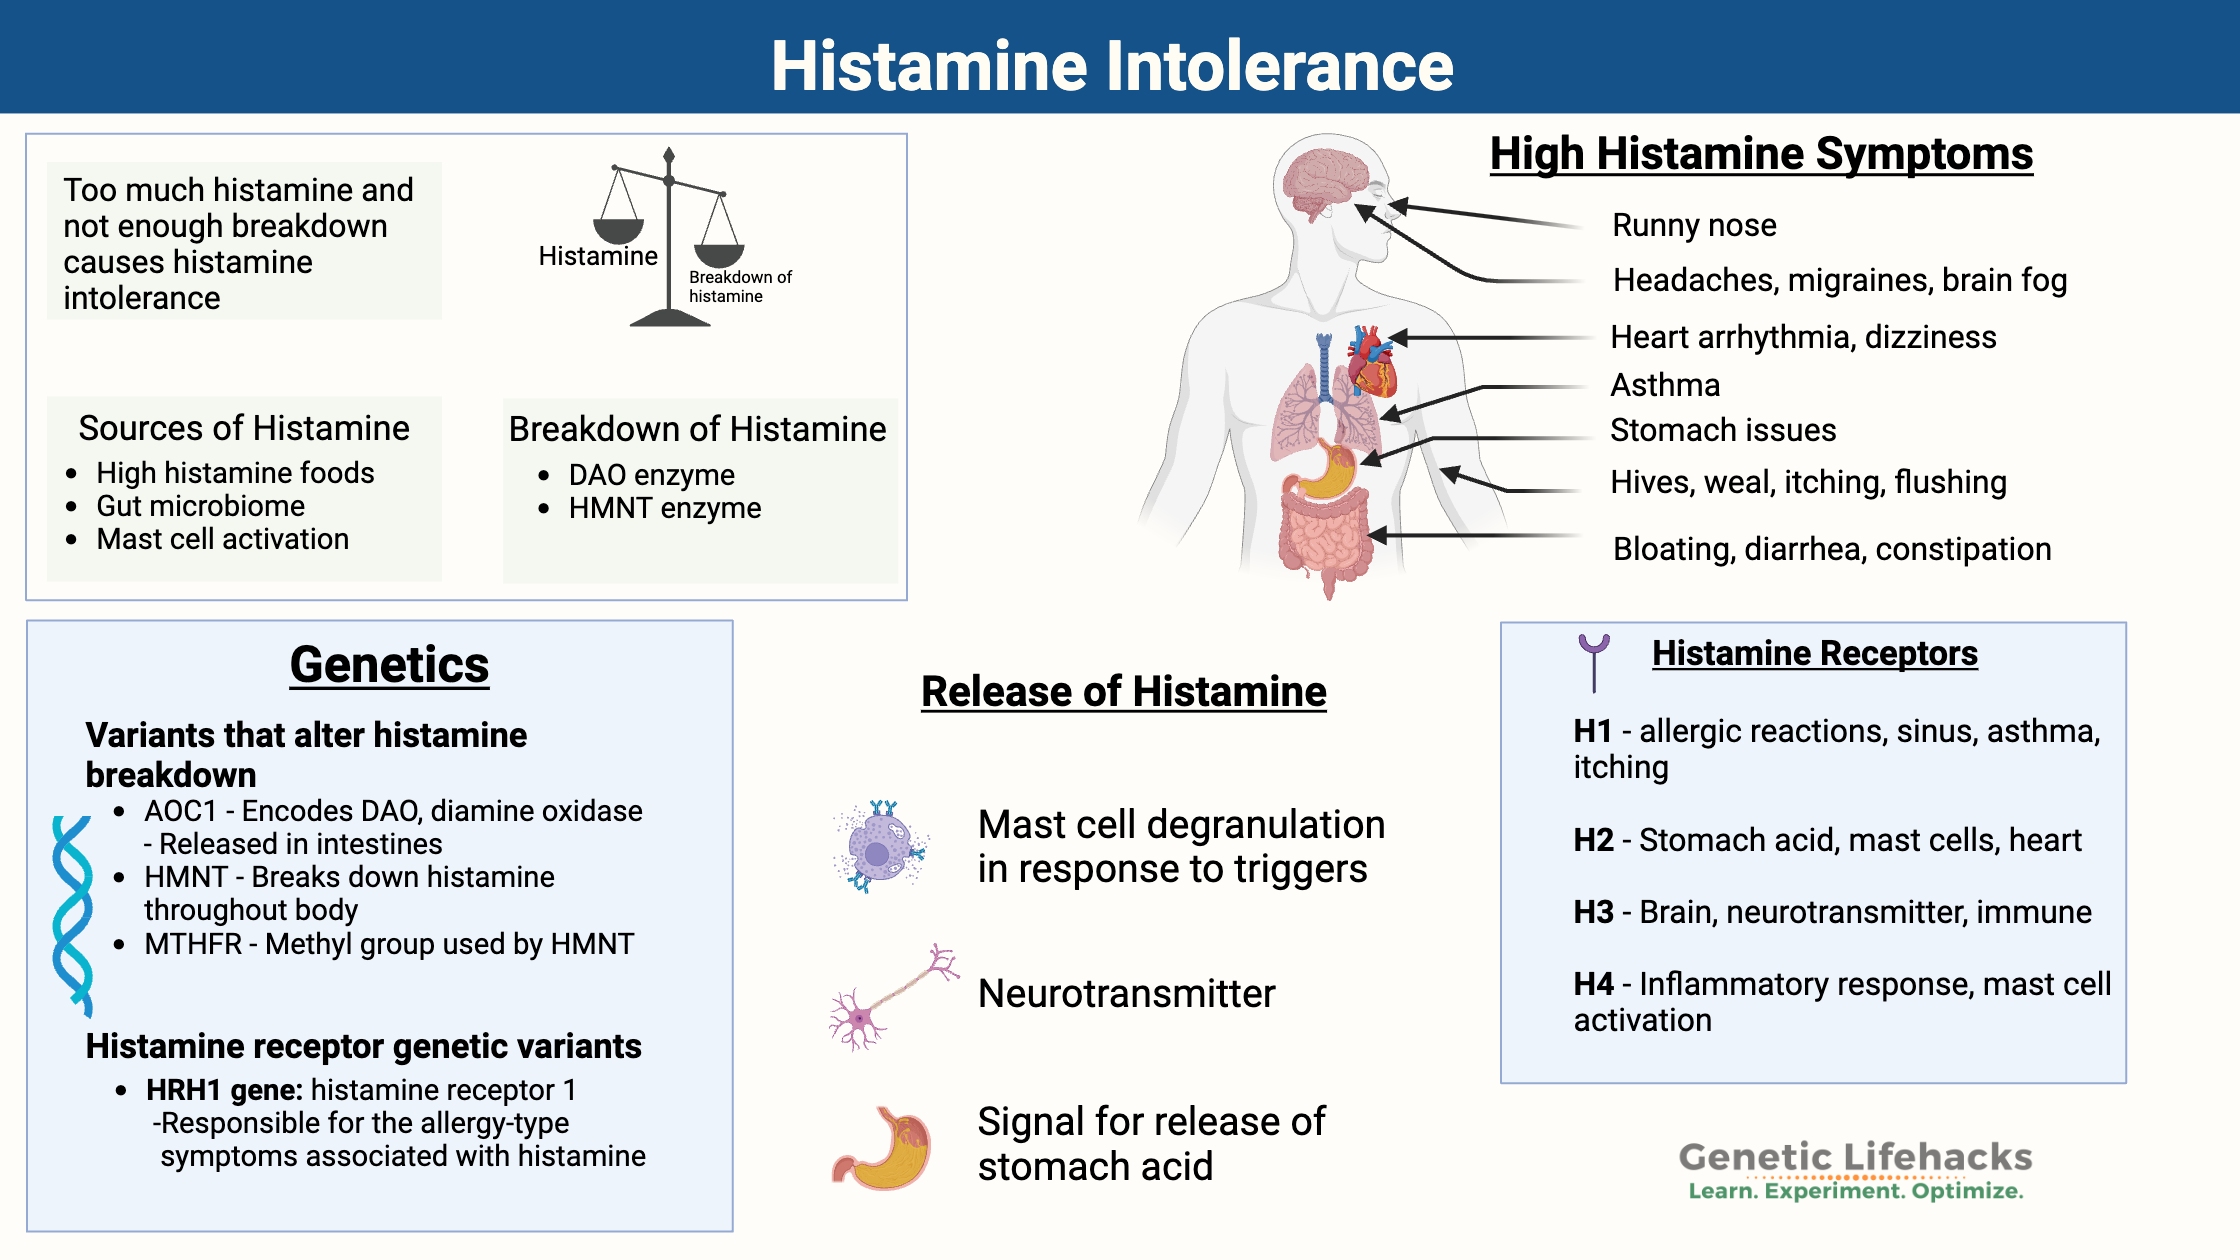 Histamine intolerance symptoms, genetic components, histamine